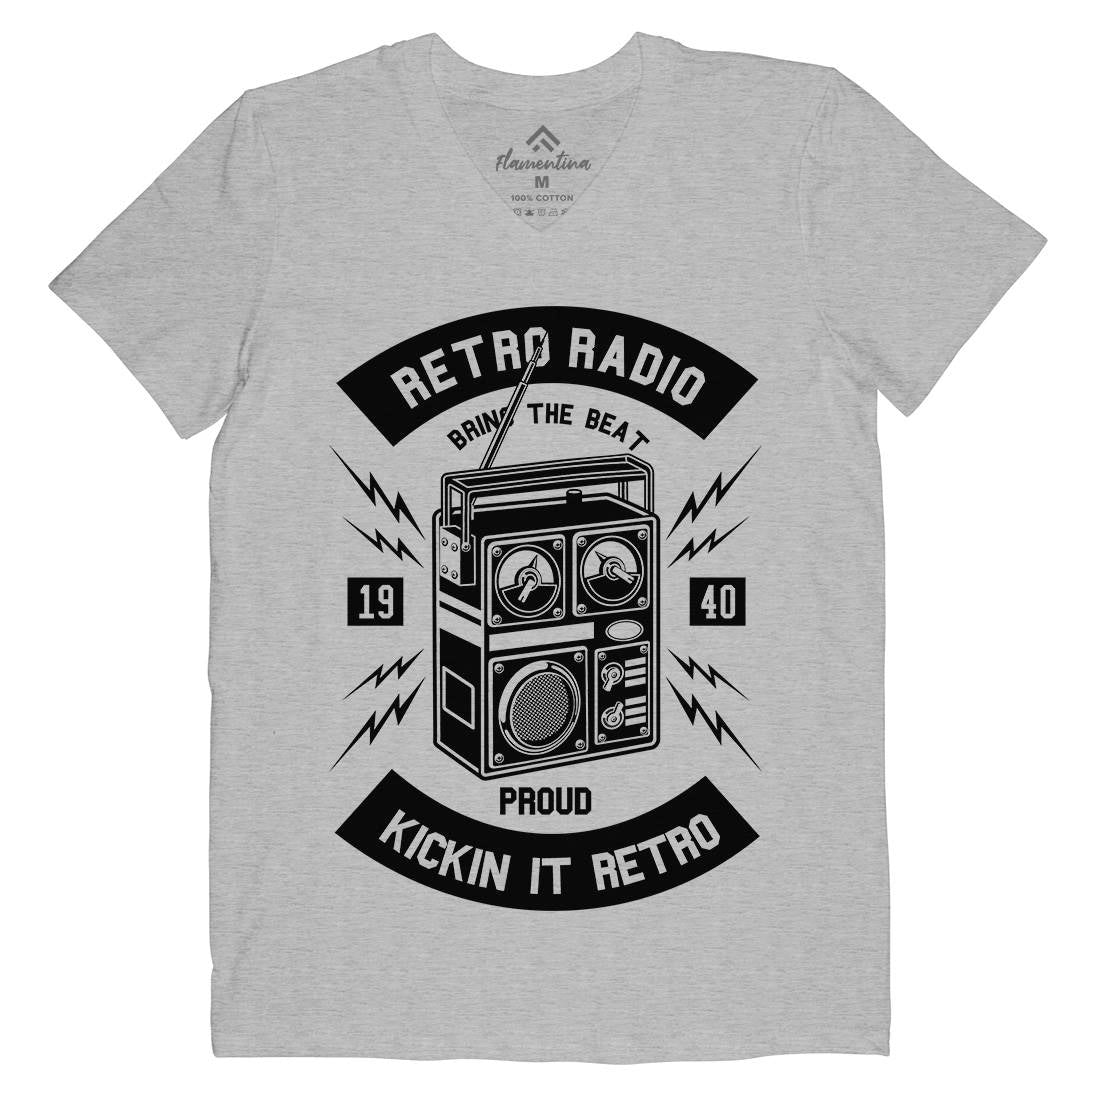 Retro Radio Mens V-Neck T-Shirt Music B610